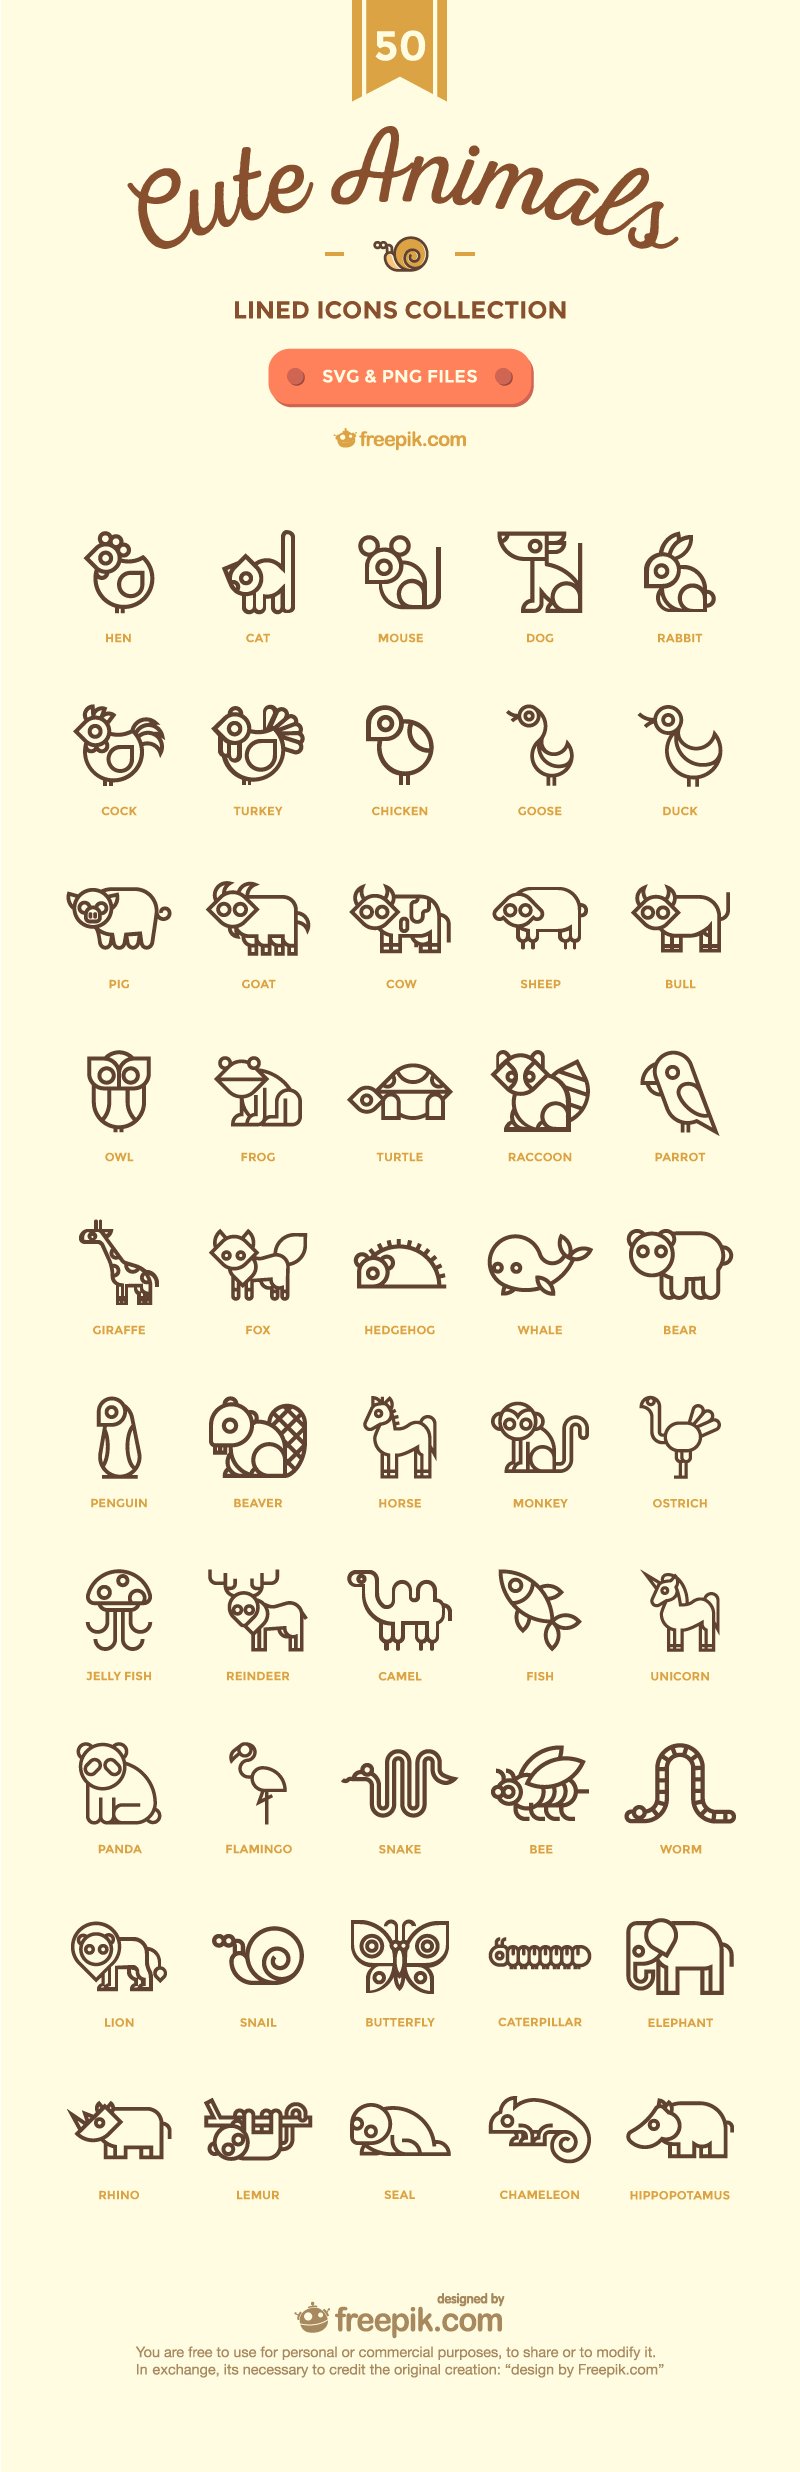 50 Free Cute Linear Animal Icons | Creative Beacon